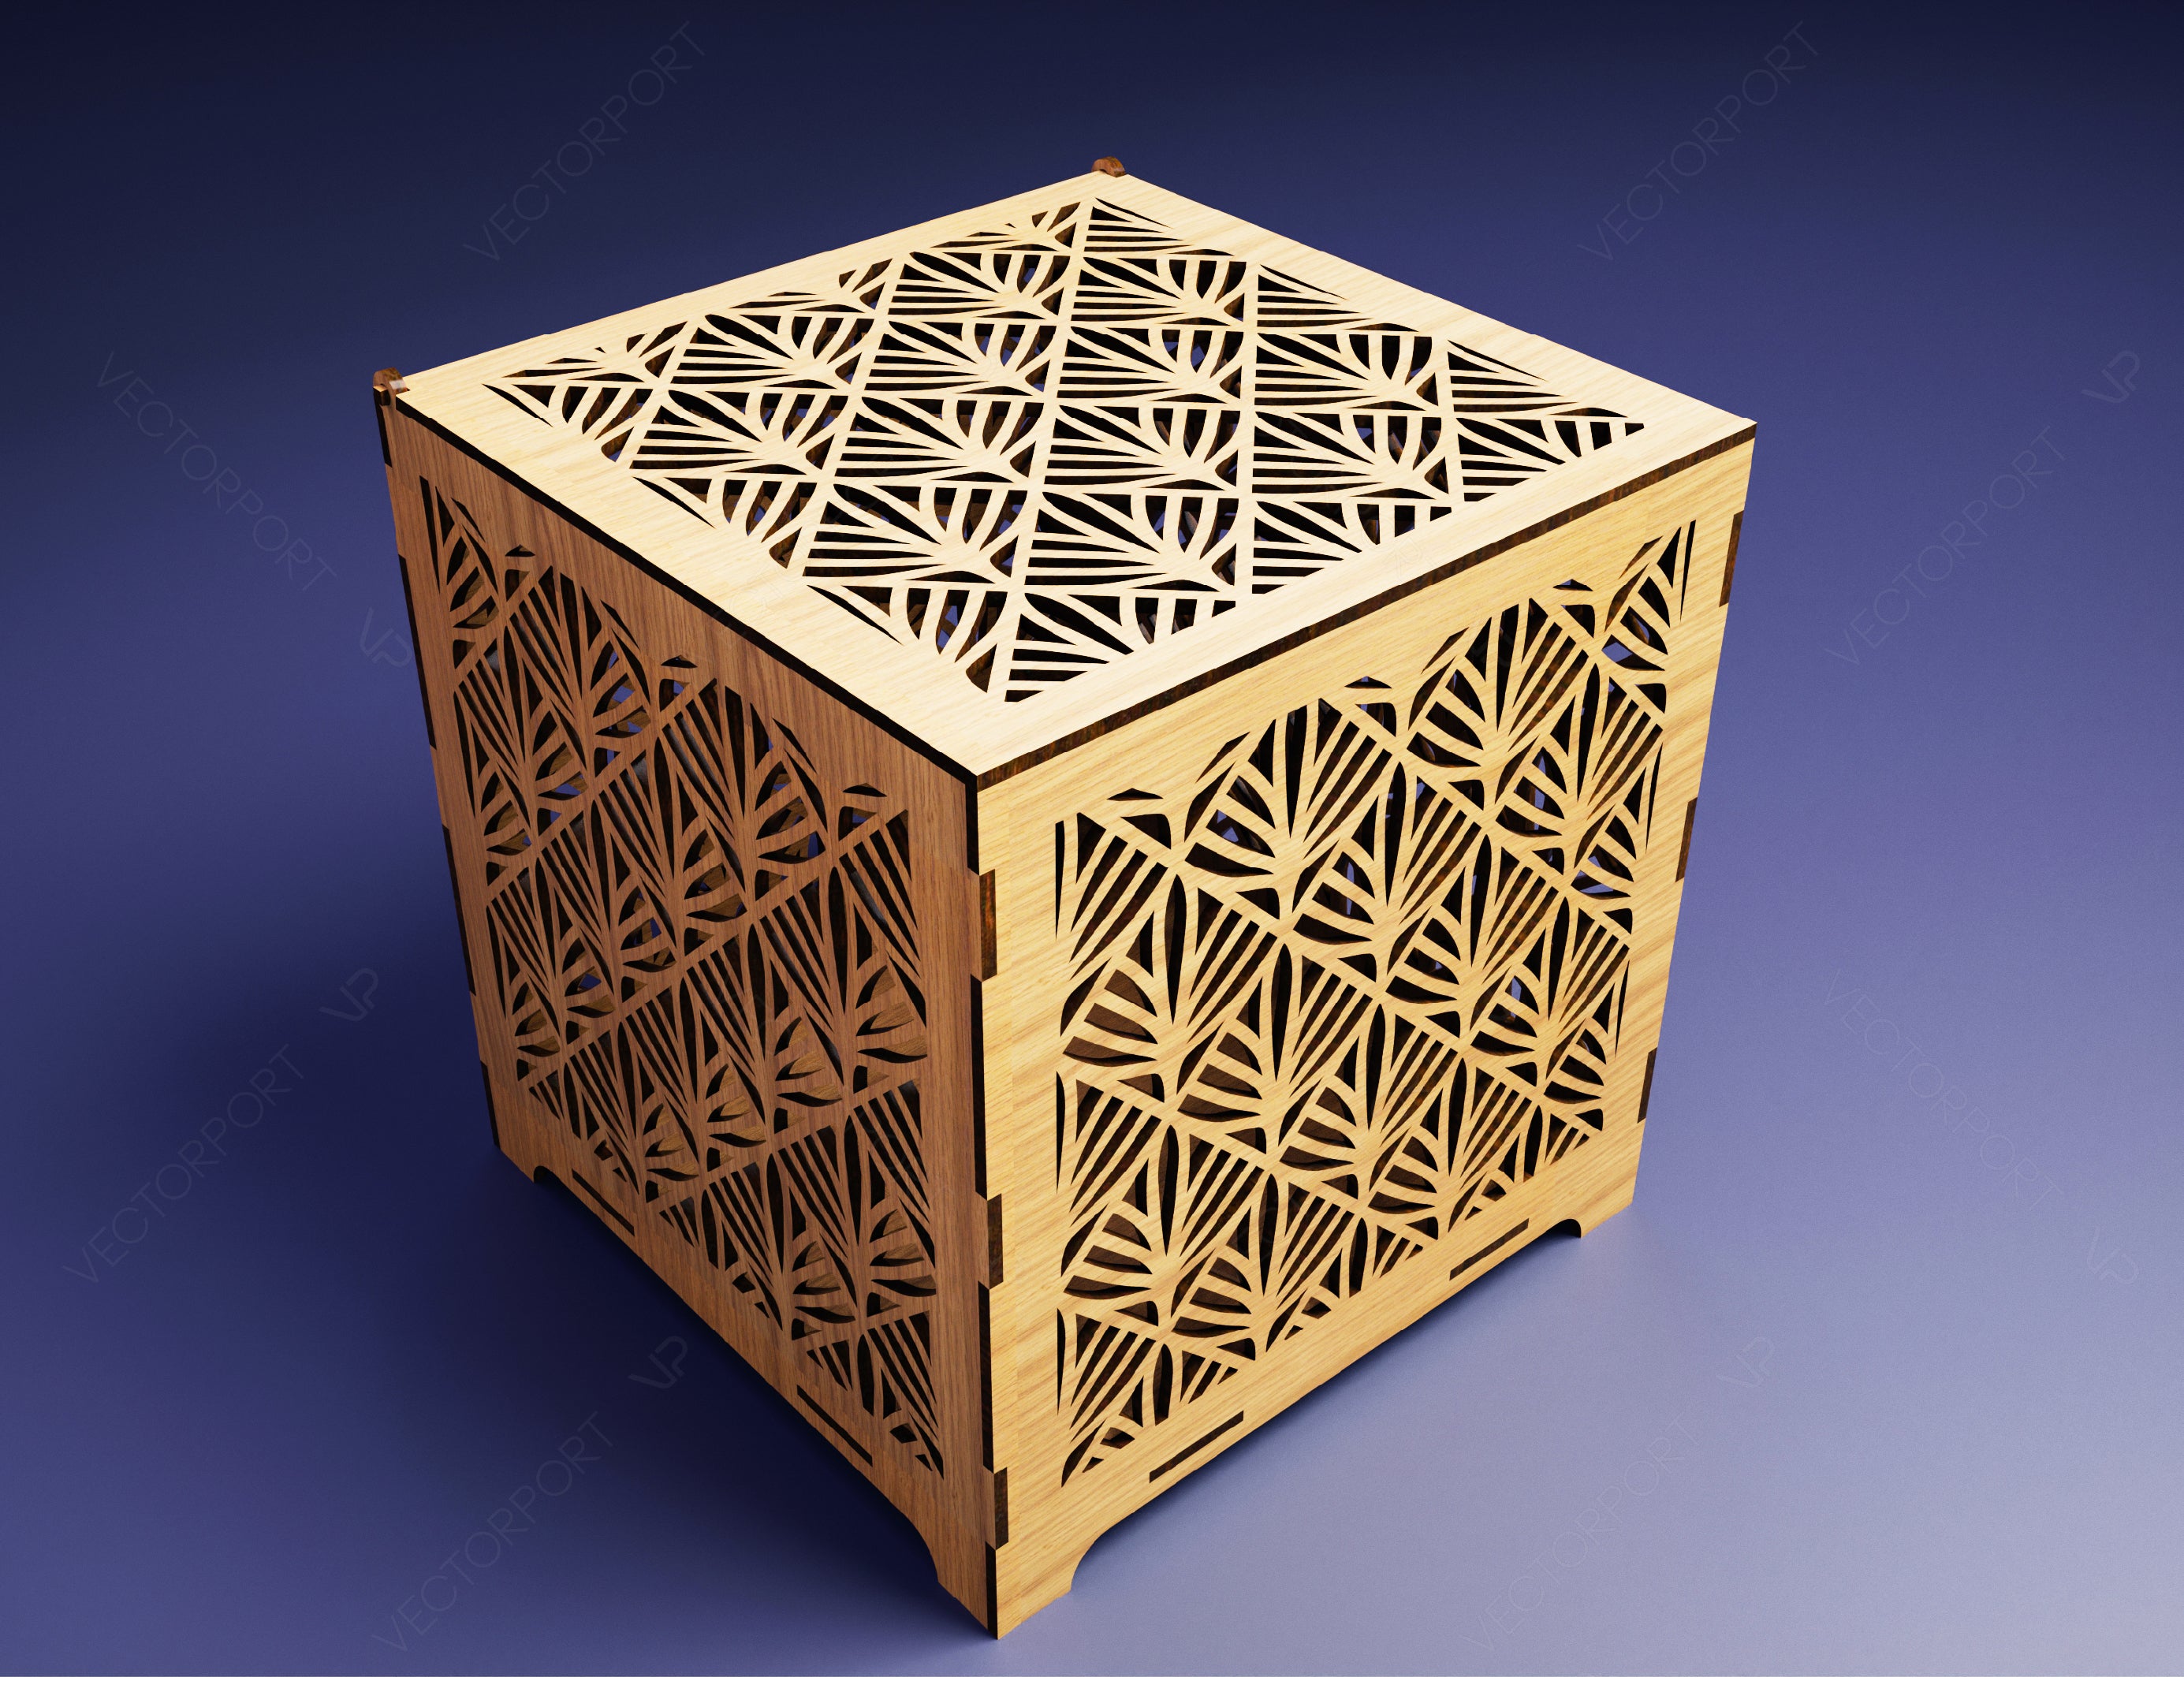 Ornamental Laser Cutting Wooden Box Geometric Jewelry Gift Box Candle holder template Wedding Glowforge Cut Files |#U021|